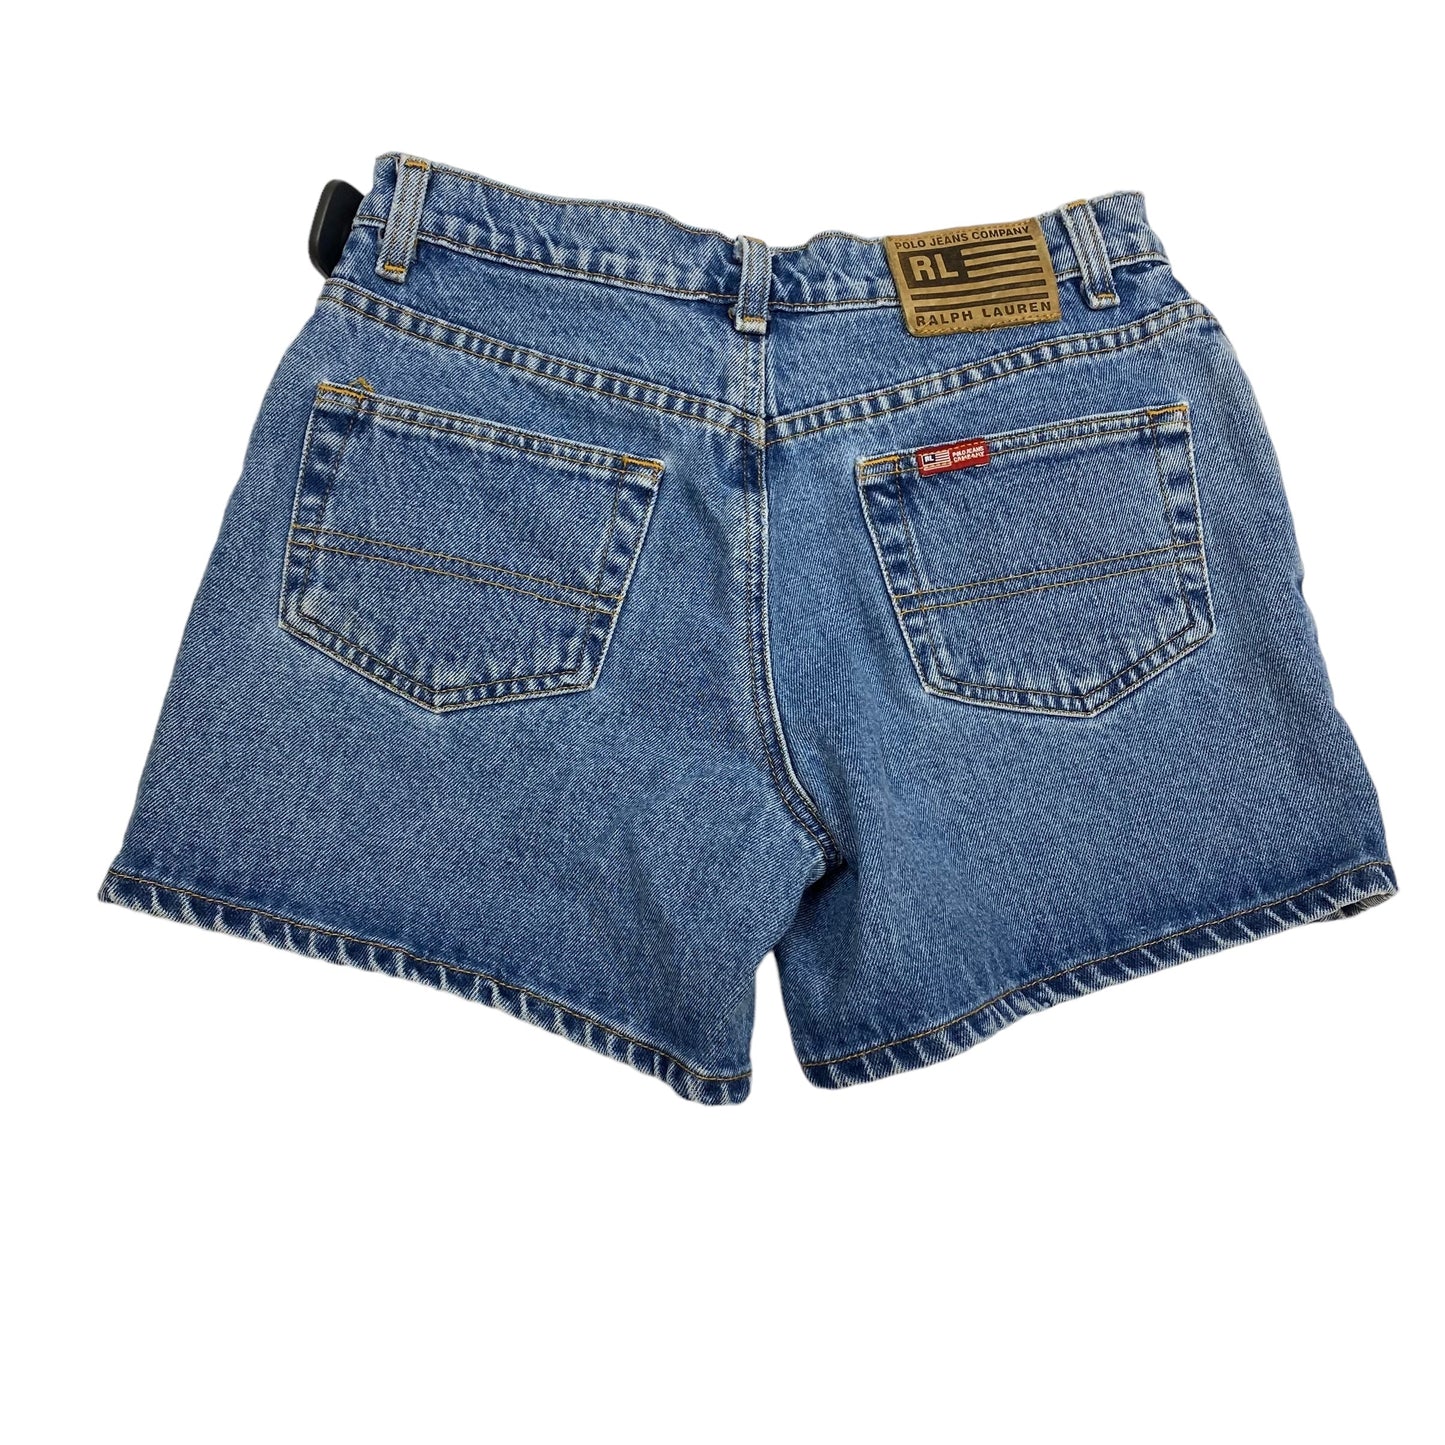 Blue Denim Shorts Ralph Lauren, Size 4